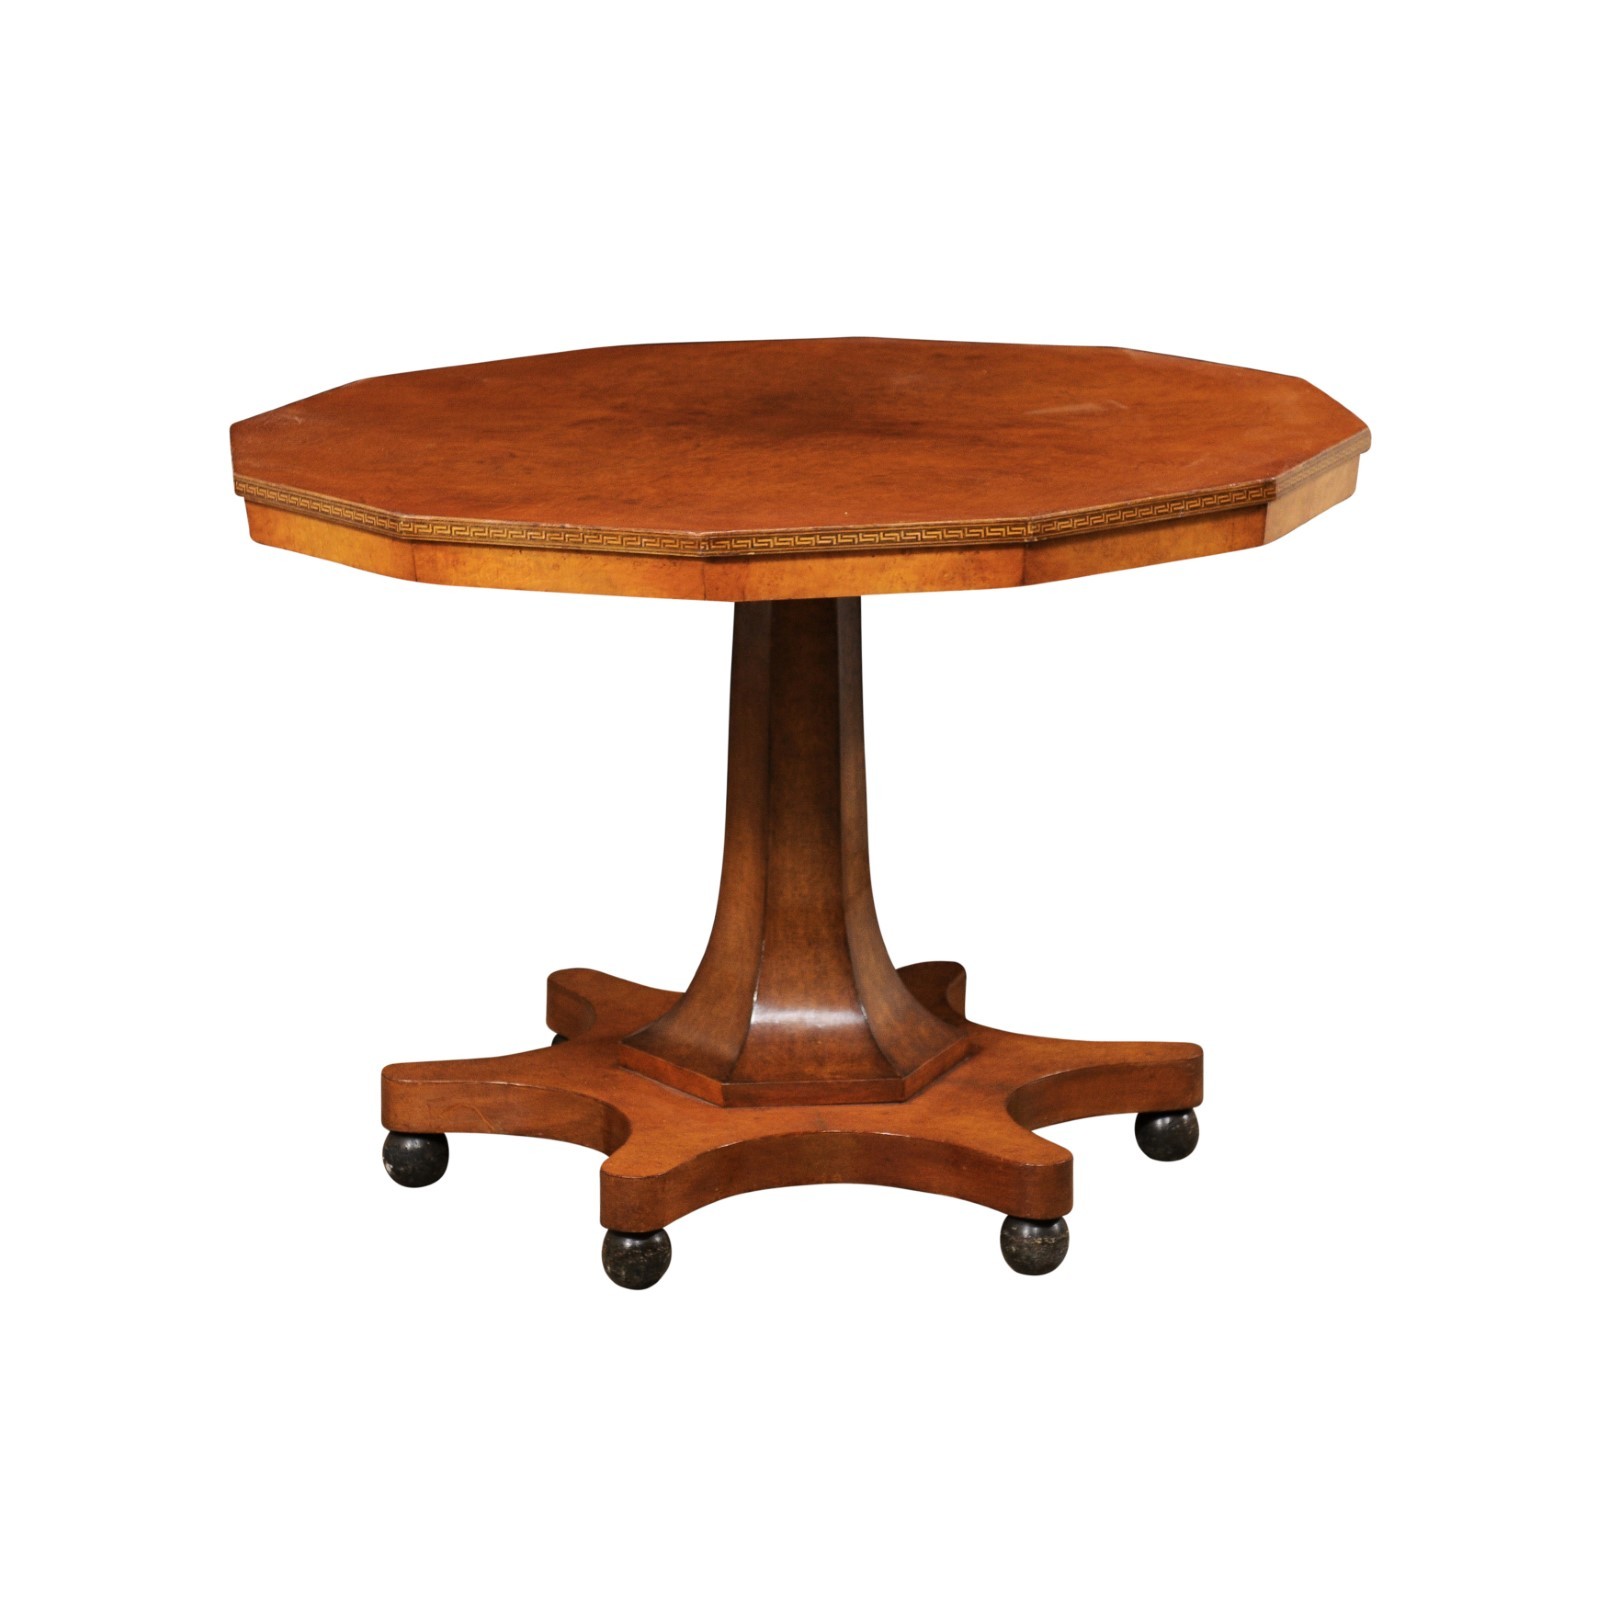 Swedish Dodecagon-Shaped Pedestal Table